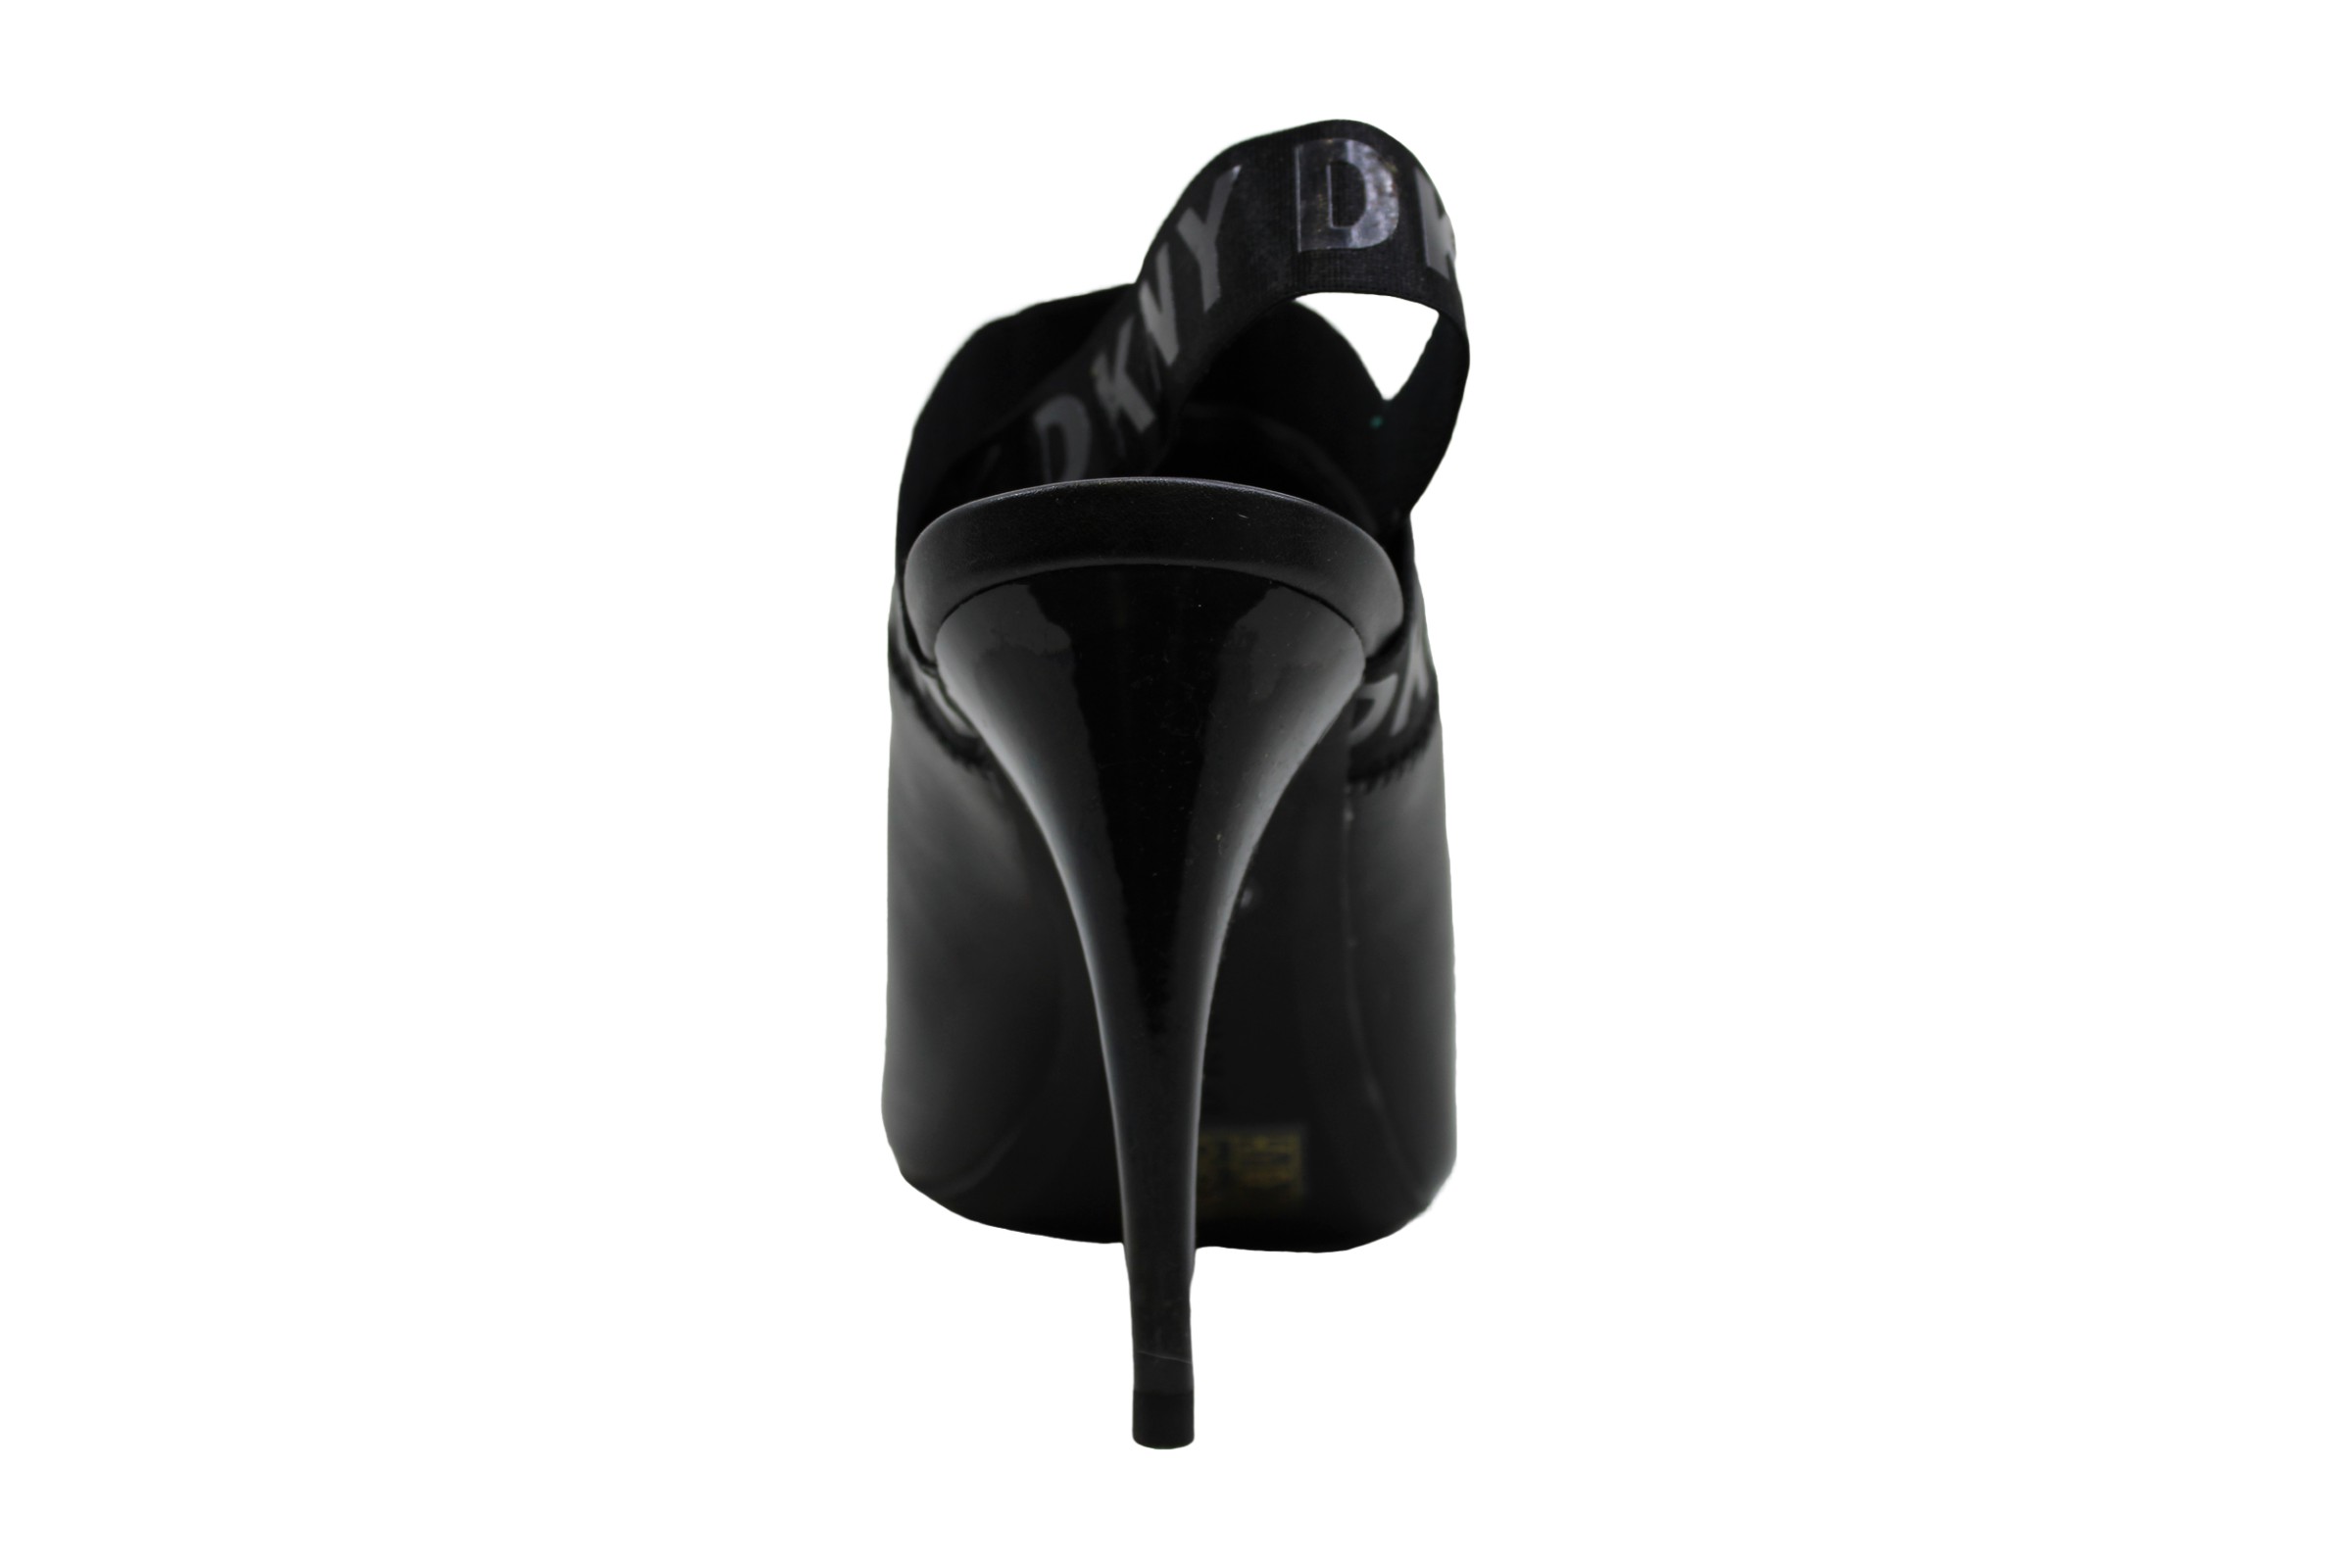 DKNY Womens Heels & Pumps in Black Color, Size 7 JGP | eBay